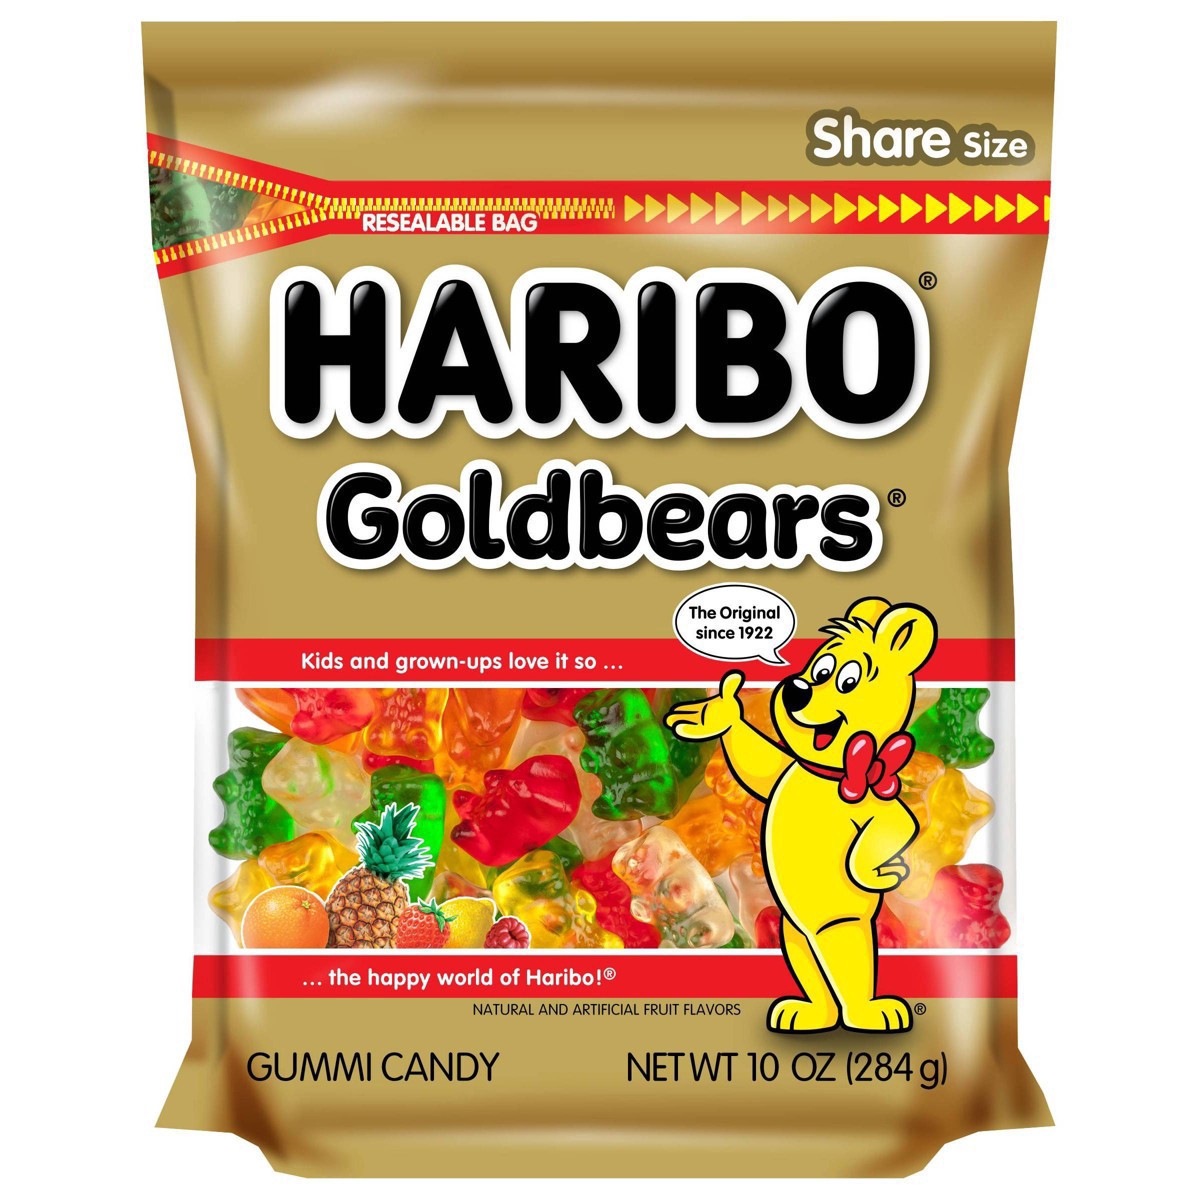 slide 14 of 22, Haribo Share Size Goldbears Gummi Candy 10 oz, 10 oz